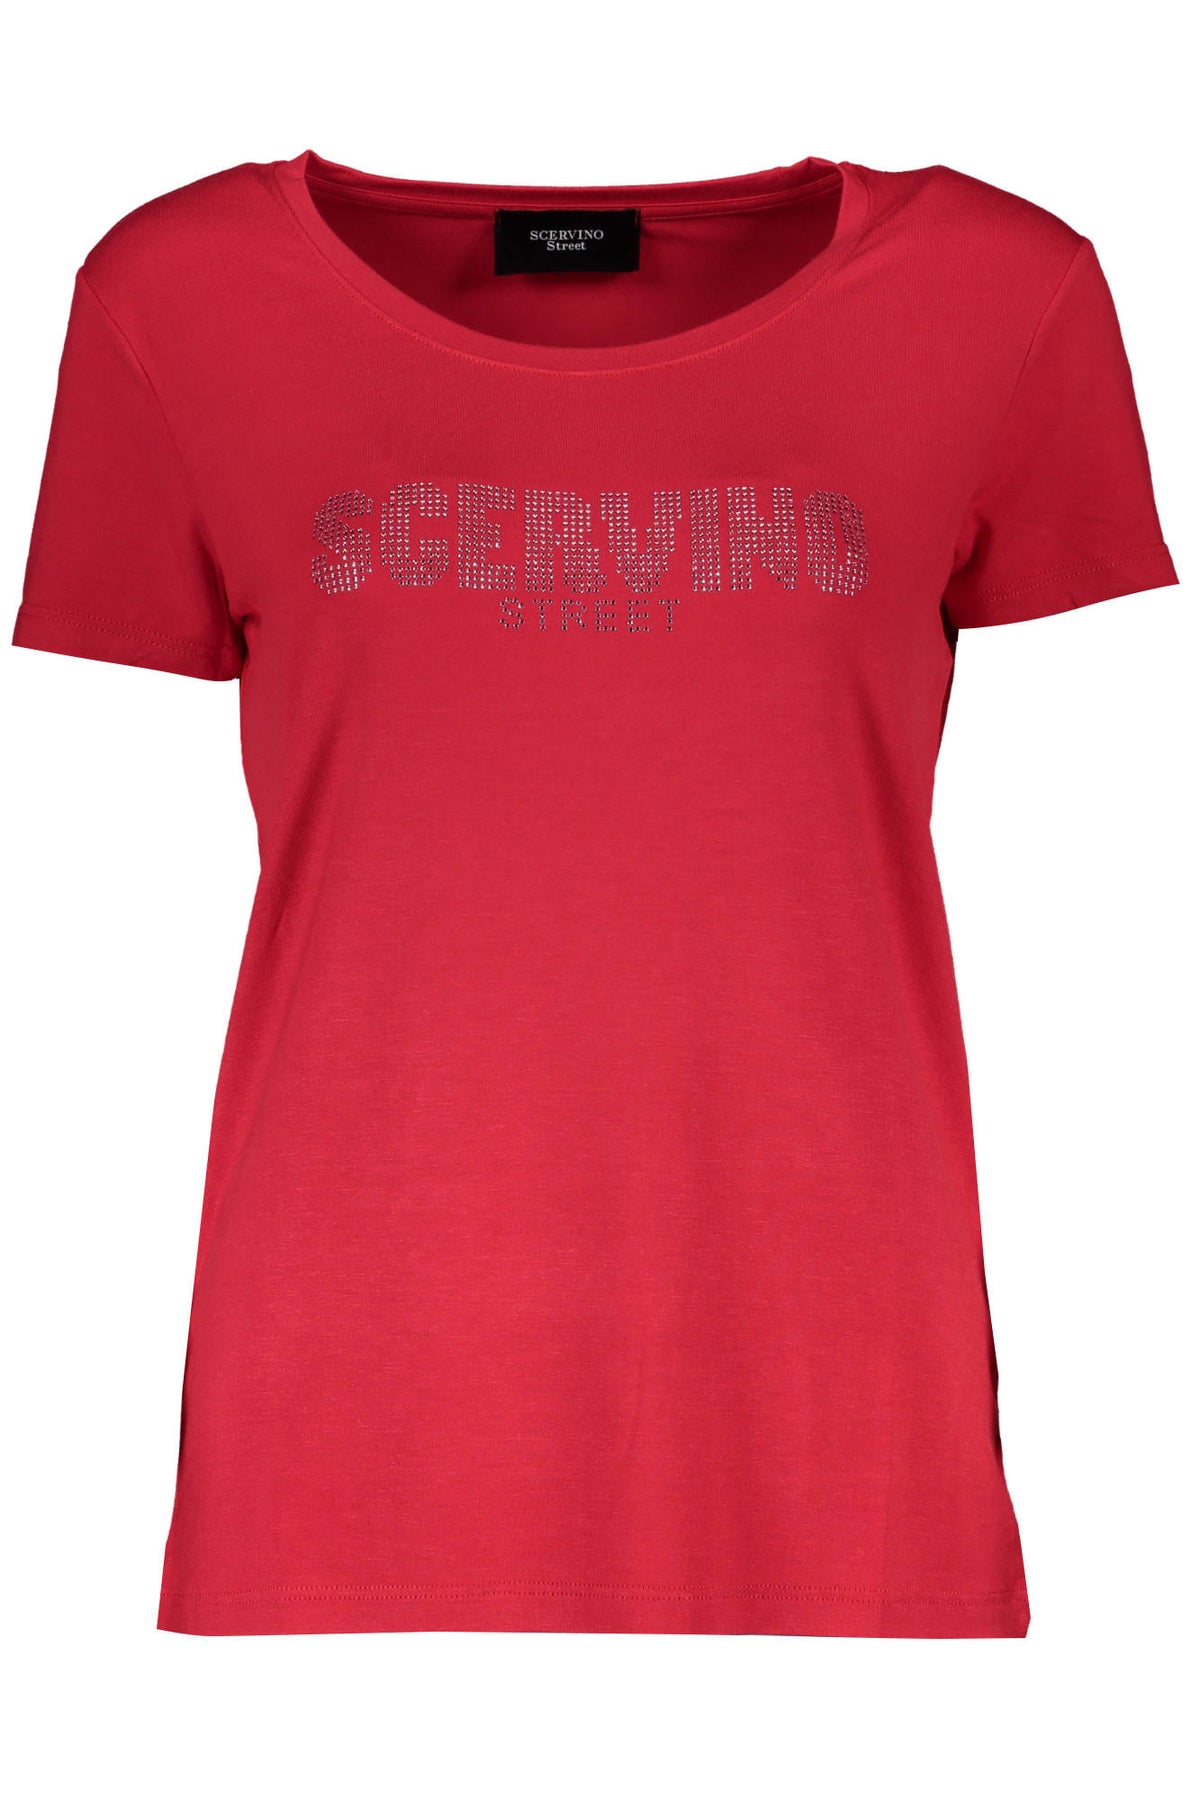 SCERVINO STREET Damen T-Shirt Shirt Sweatshirt Oberteil mit Rundhalsausschnitt, kurzärmlig